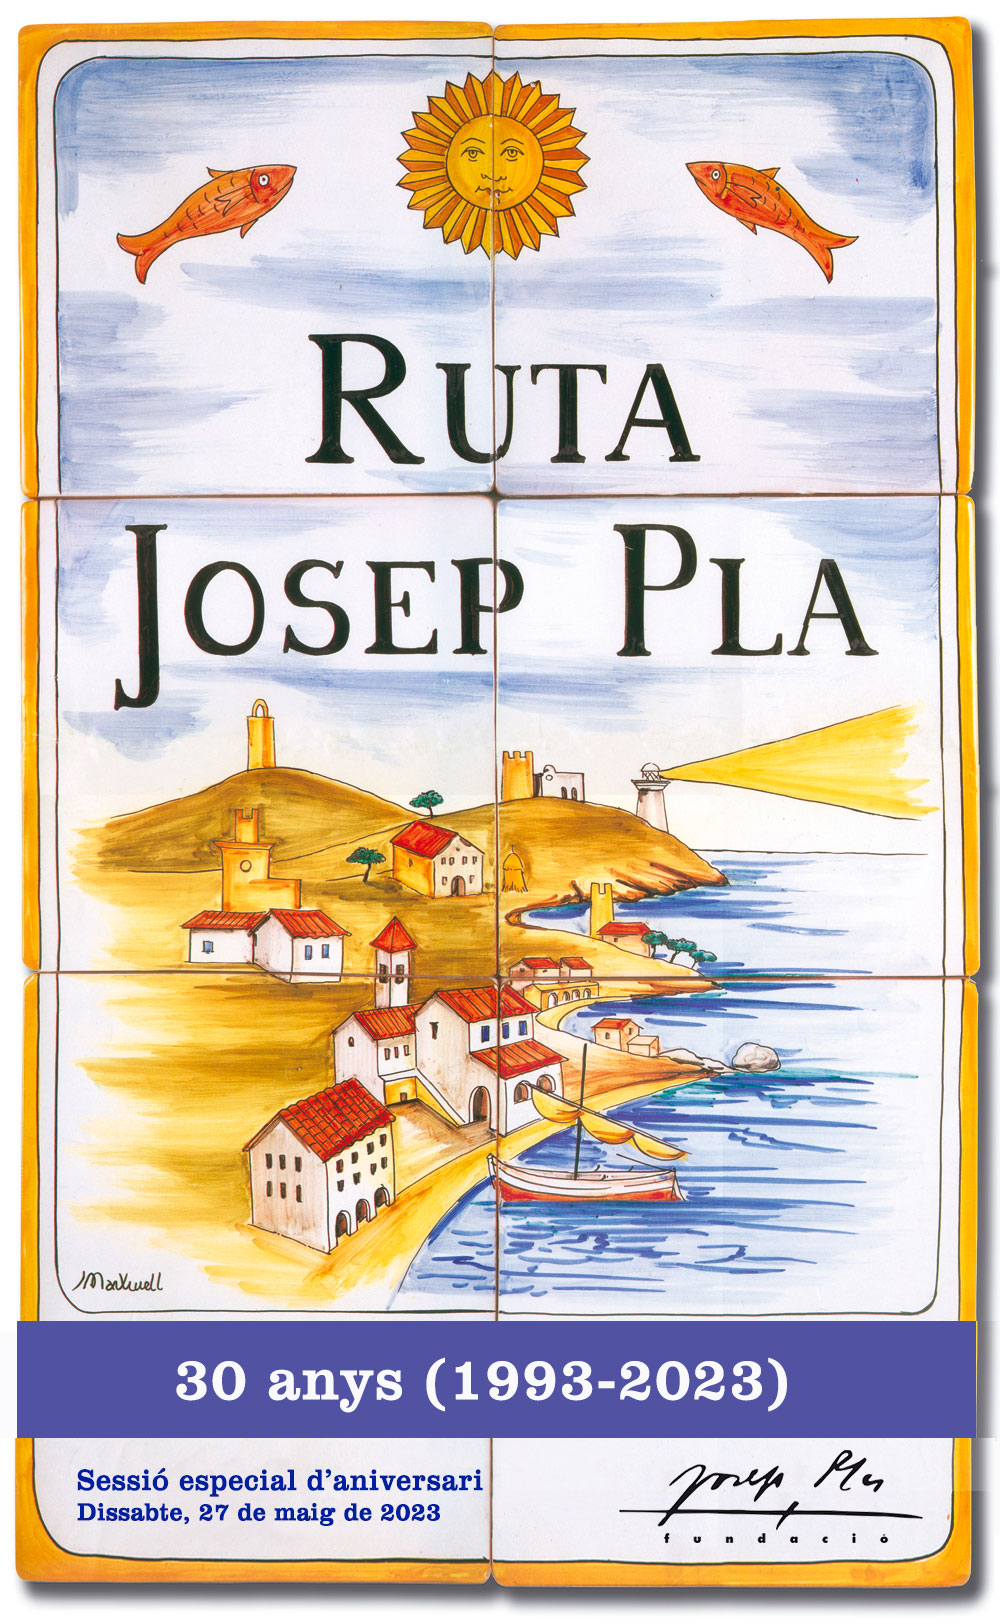 Ruta Josep Pla 30 anys